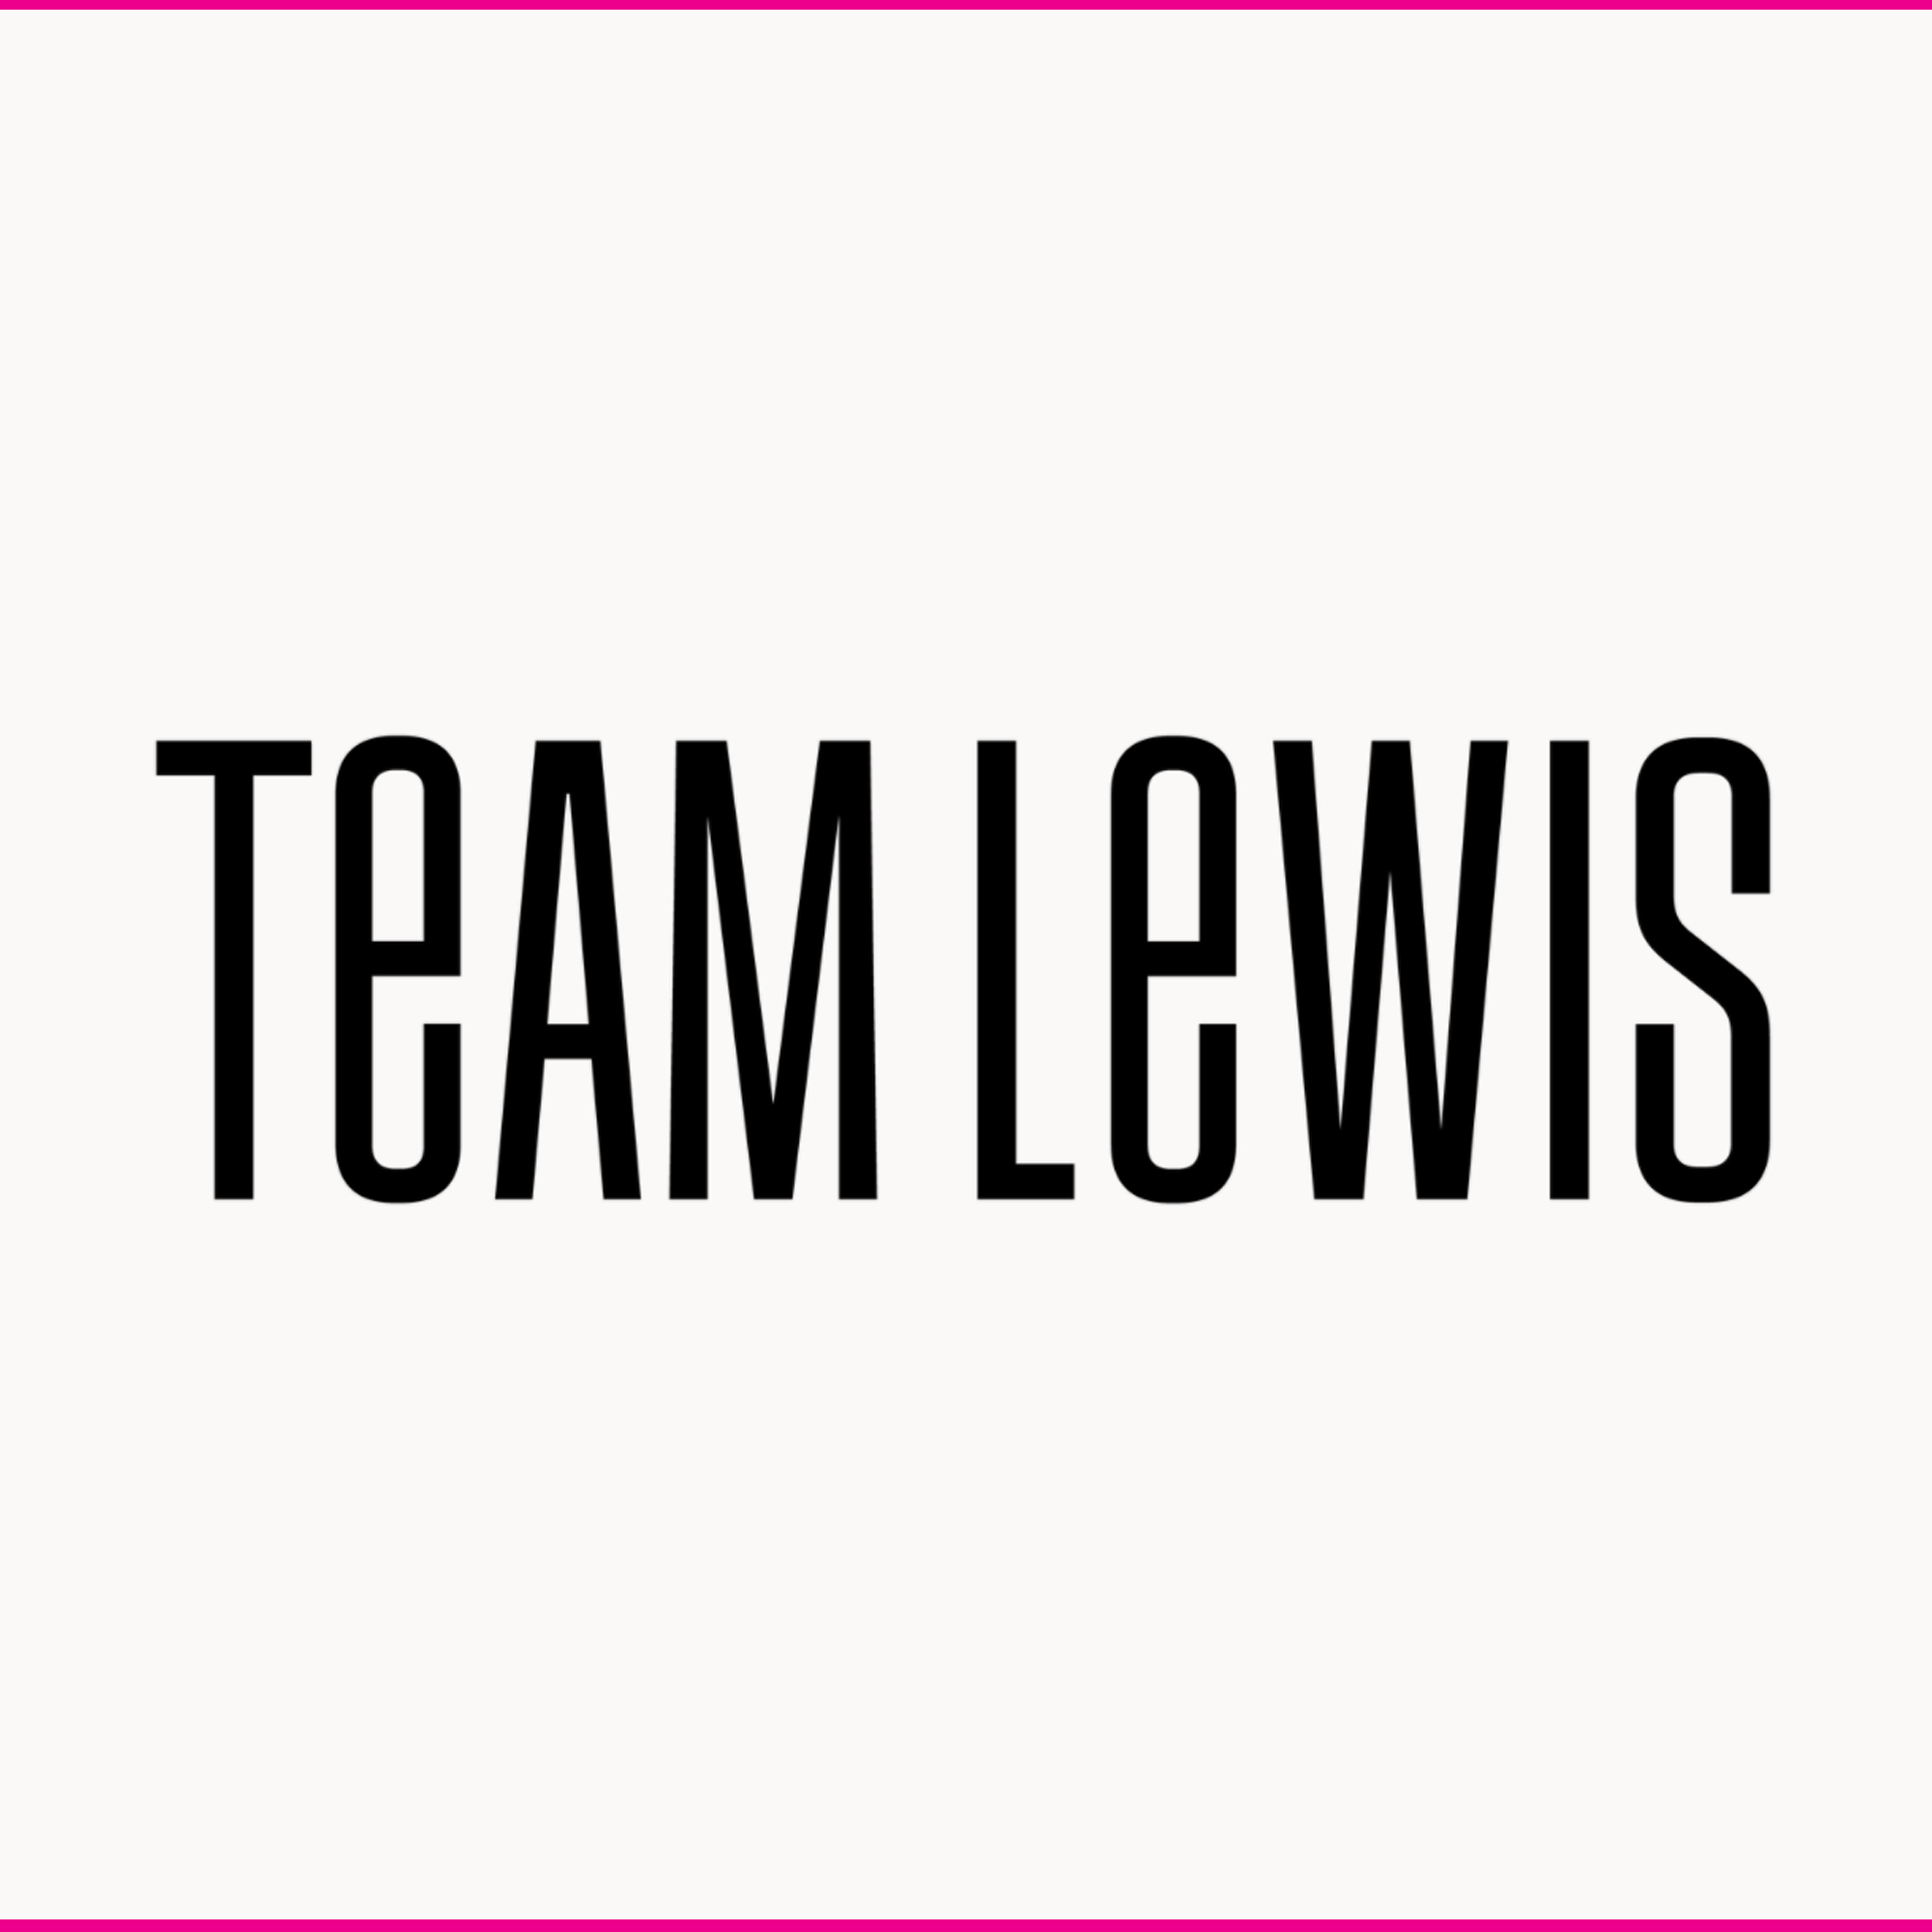 Team Lewis